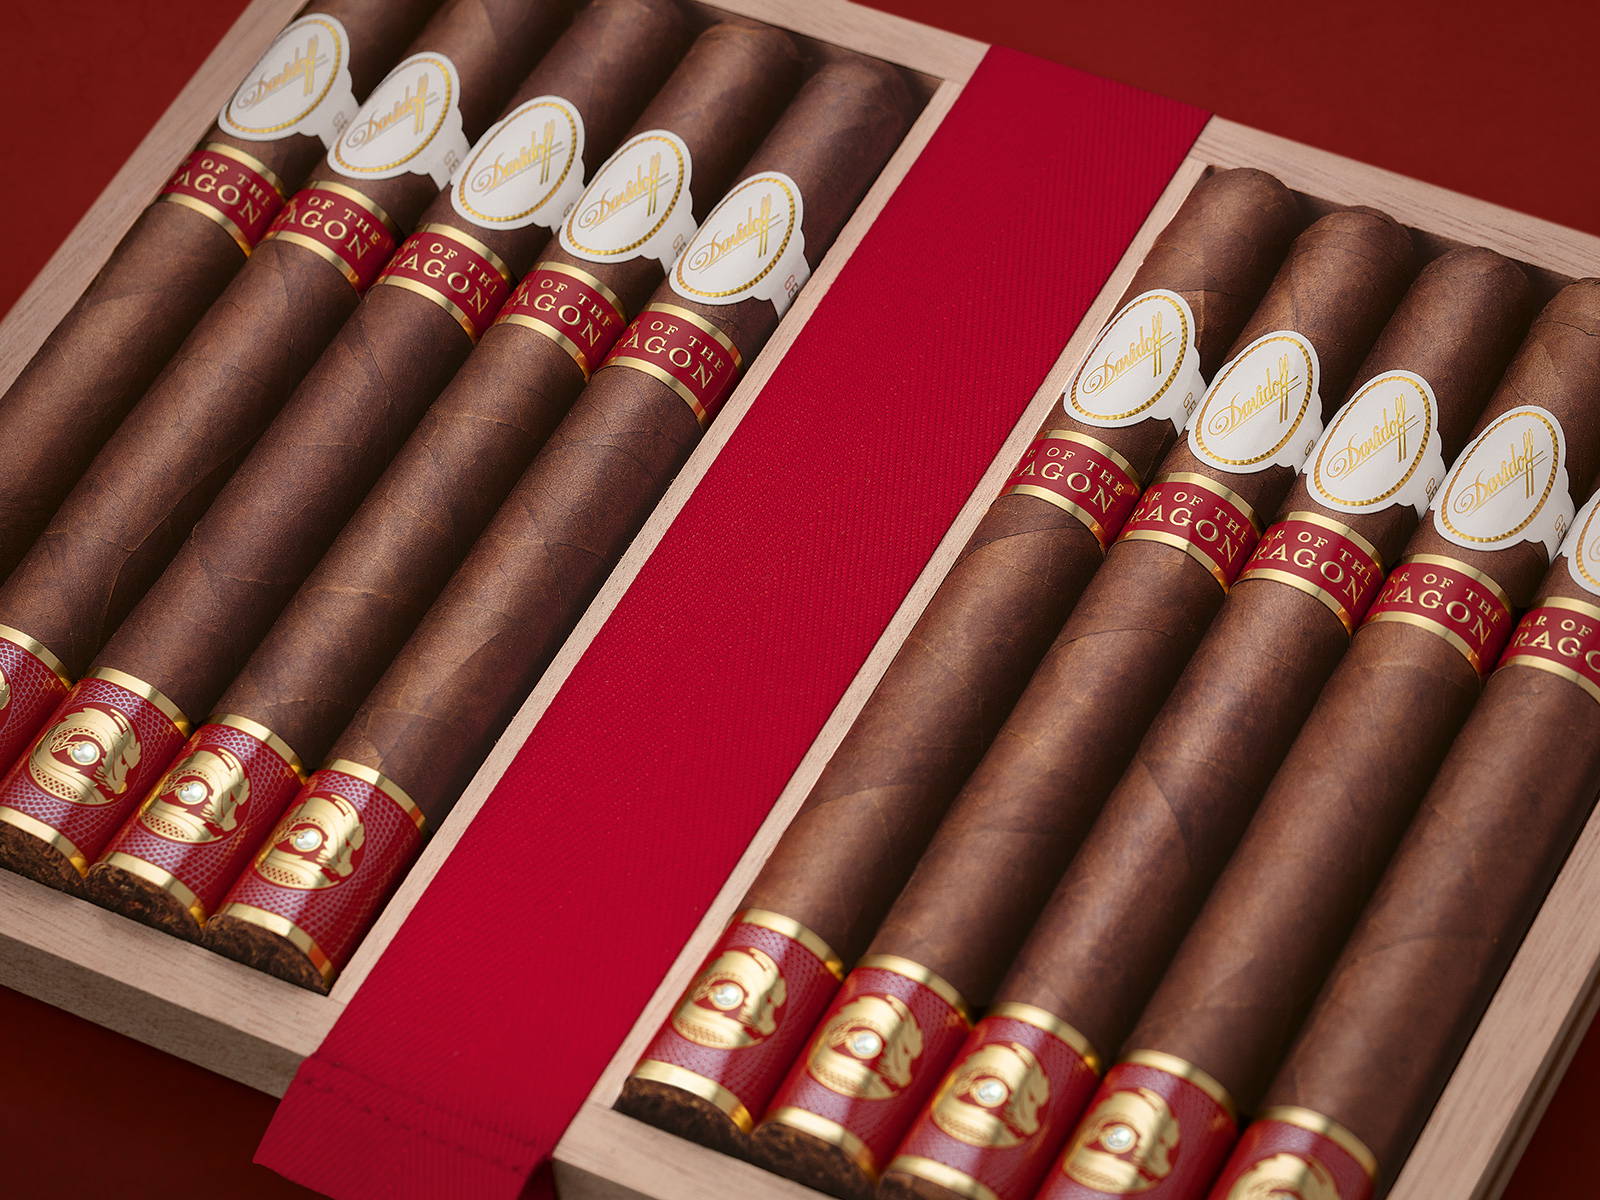 10 Davidoff Year of the Dragon Limited Edition Double-Corona-Zigarren in ihrer geöffneten Kiste.